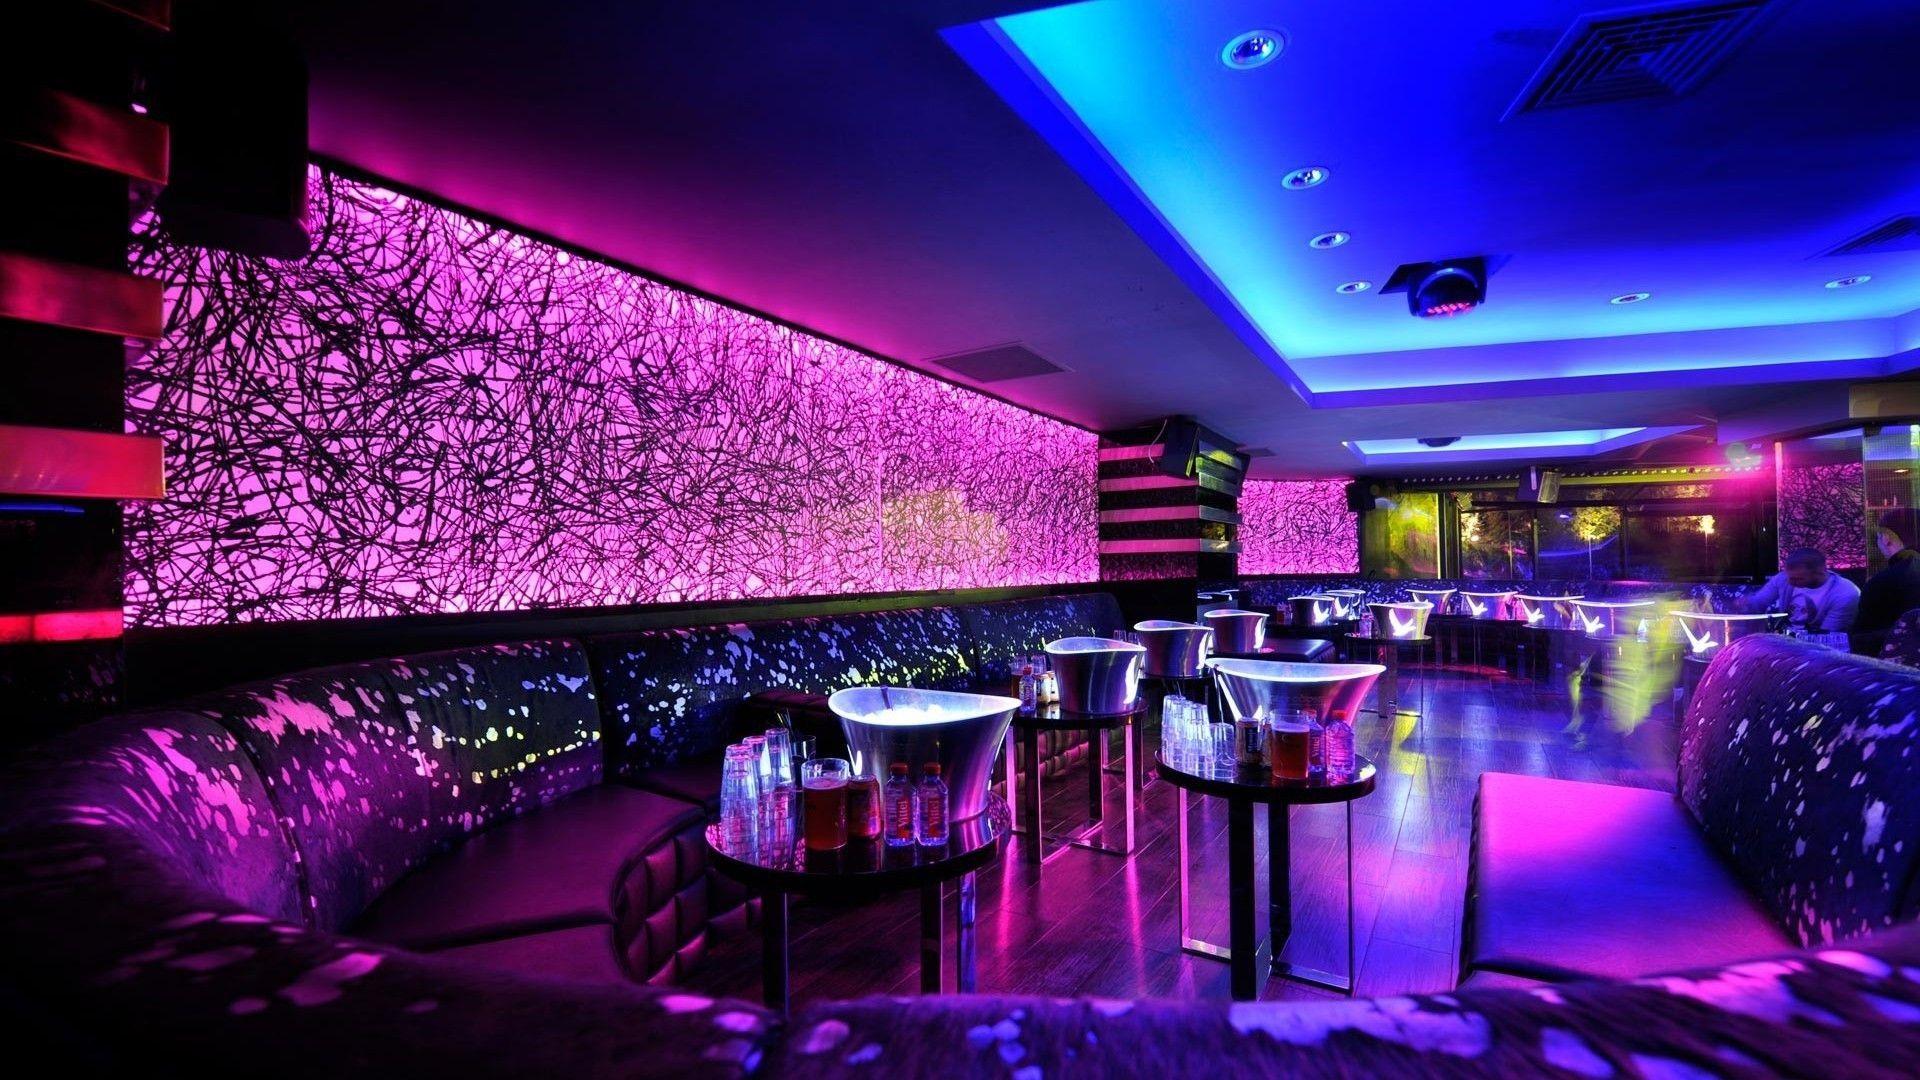 nightclub wallpapers top free nightclub backgrounds wallpaperaccess nightclub wallpapers top free